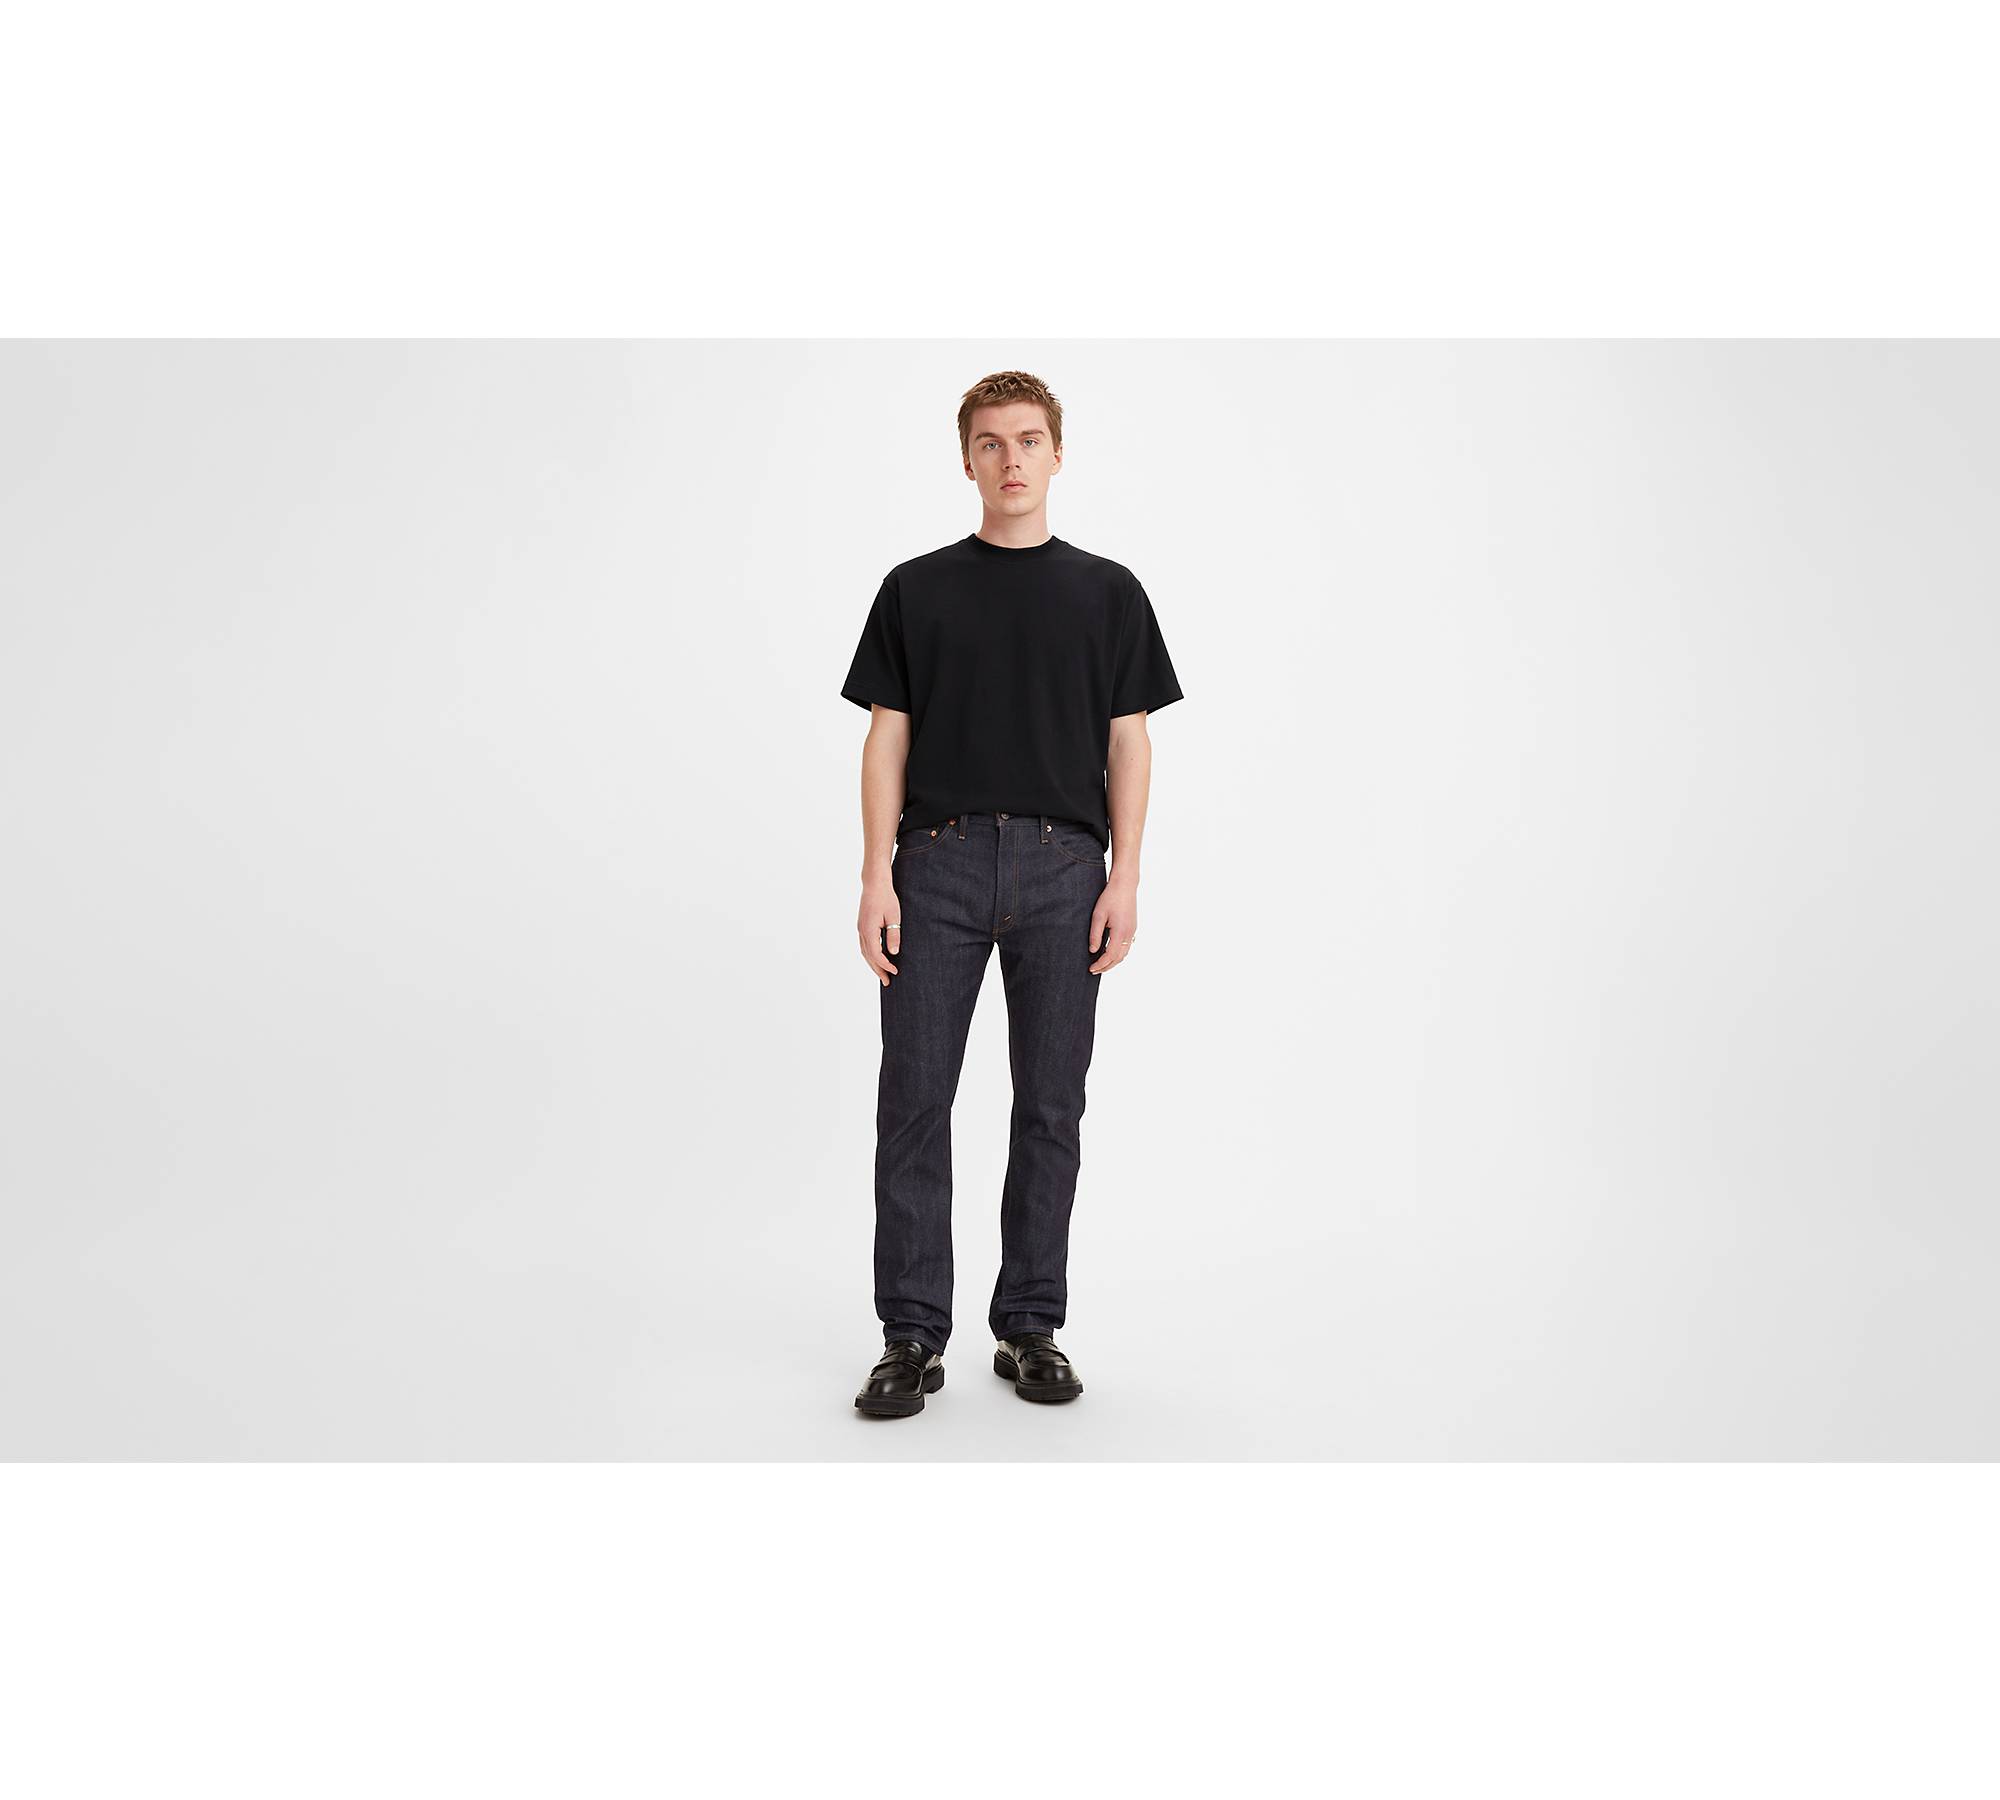 Levi's Men's 505 Regular Fit Jean, Black, 33x30 